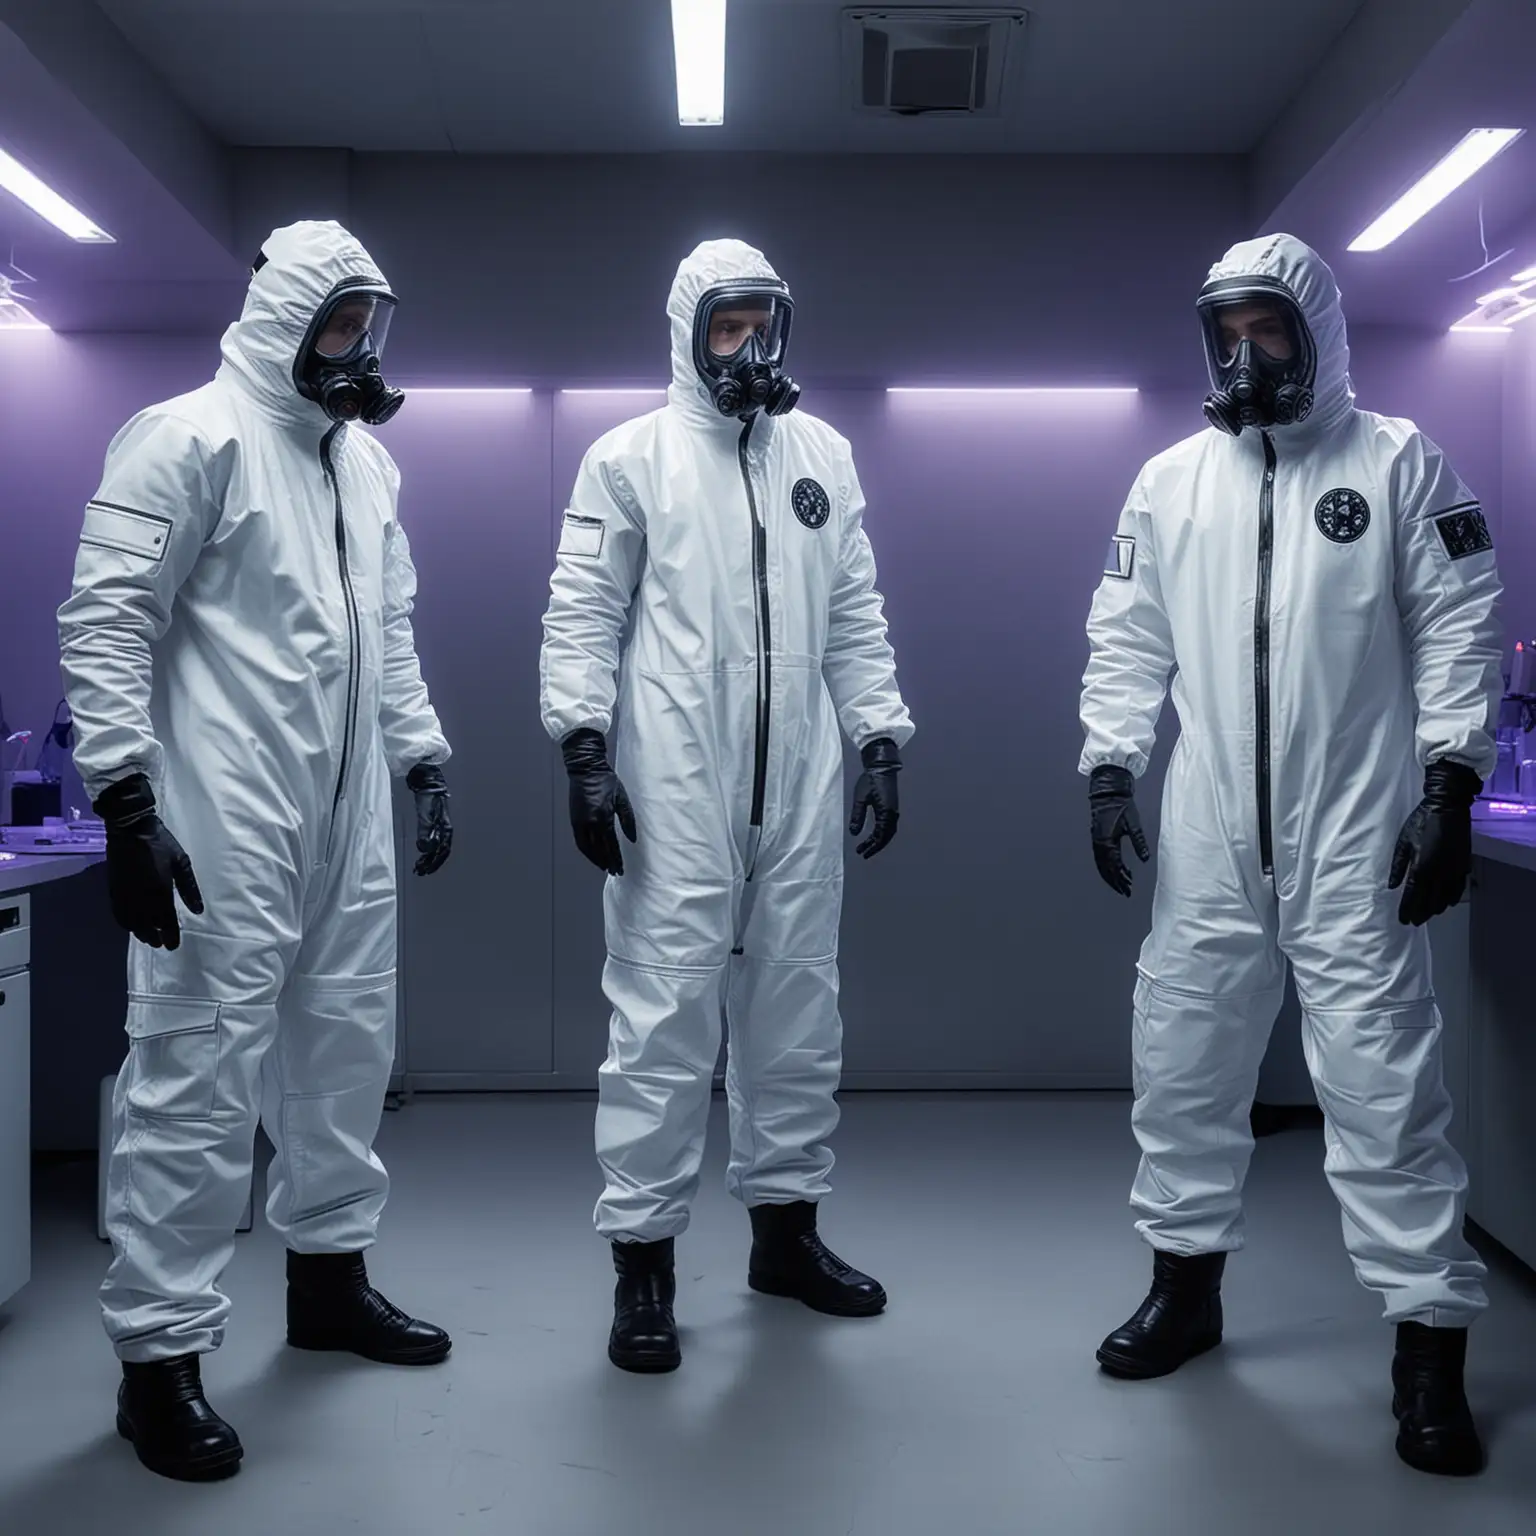 5 people in futuristic lab. 3 in bio hazard suits. UV light lights it up

